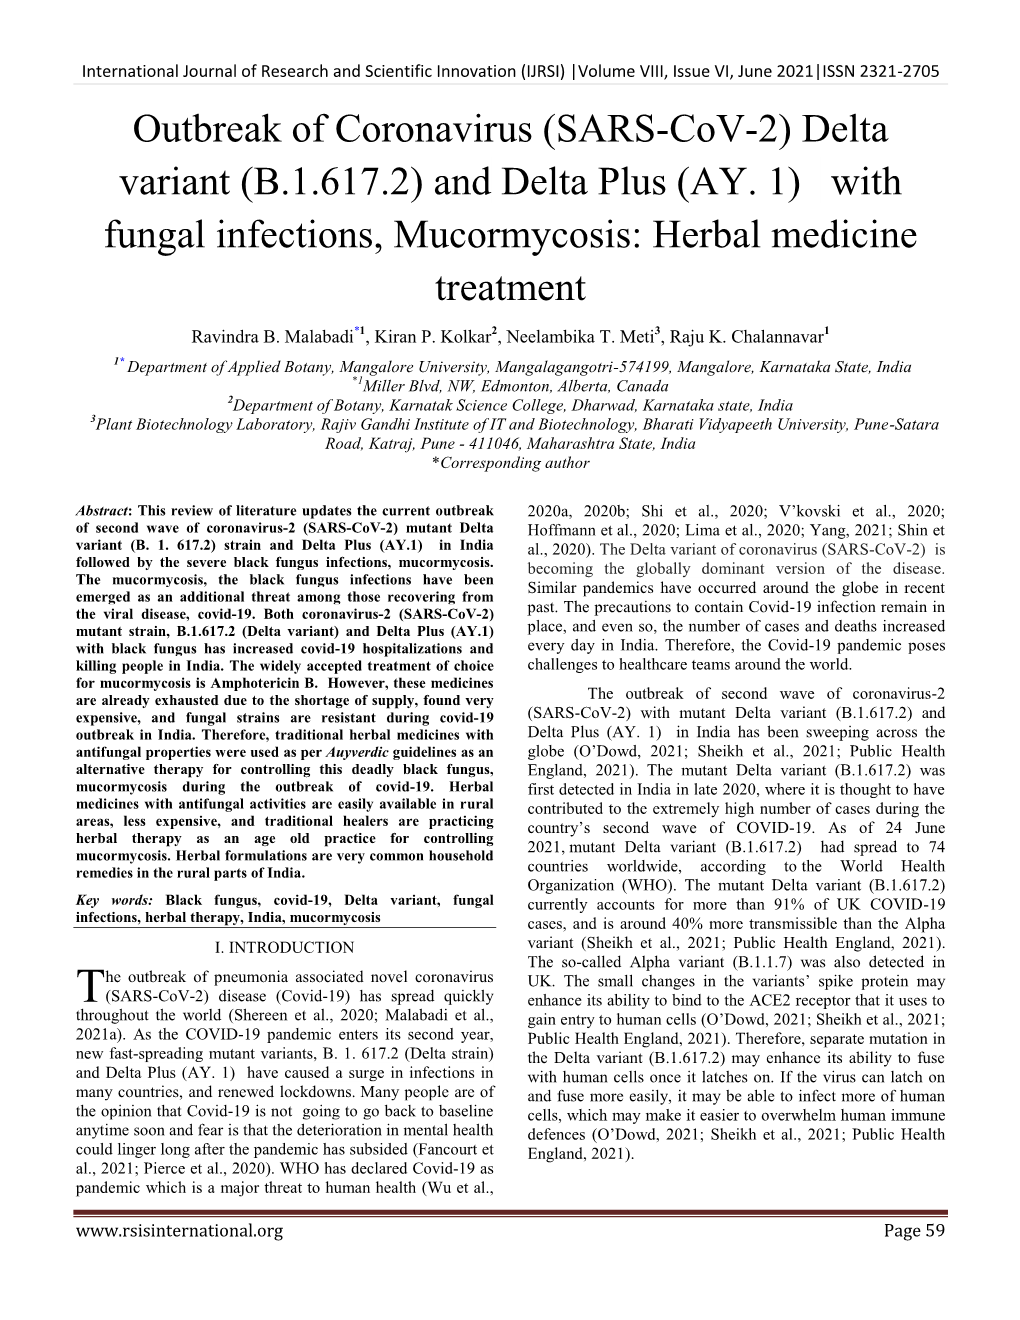 Outbreak of Coronavirus (SARS-Cov-2) Delta Variant (B.1.617.2) and Delta Plus (AY